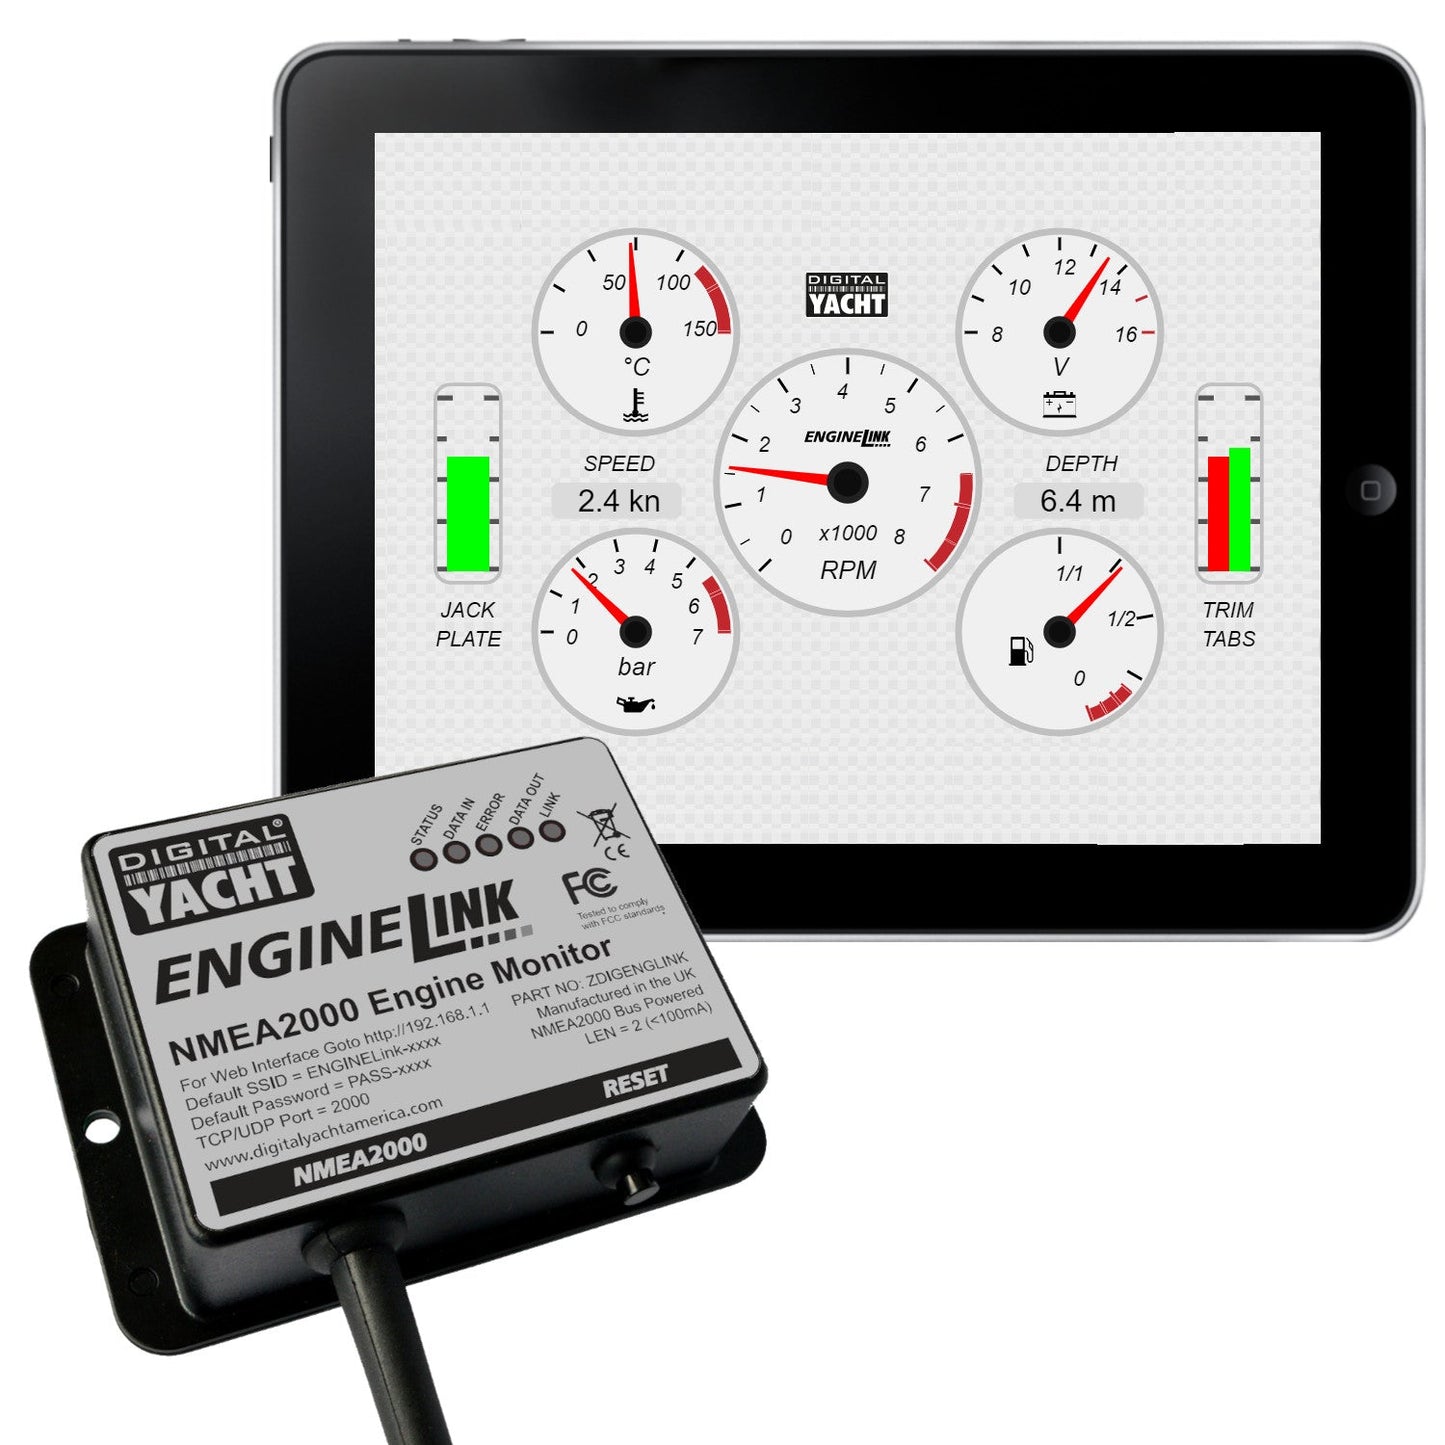 ENGINELink – Wireless Engine Interface